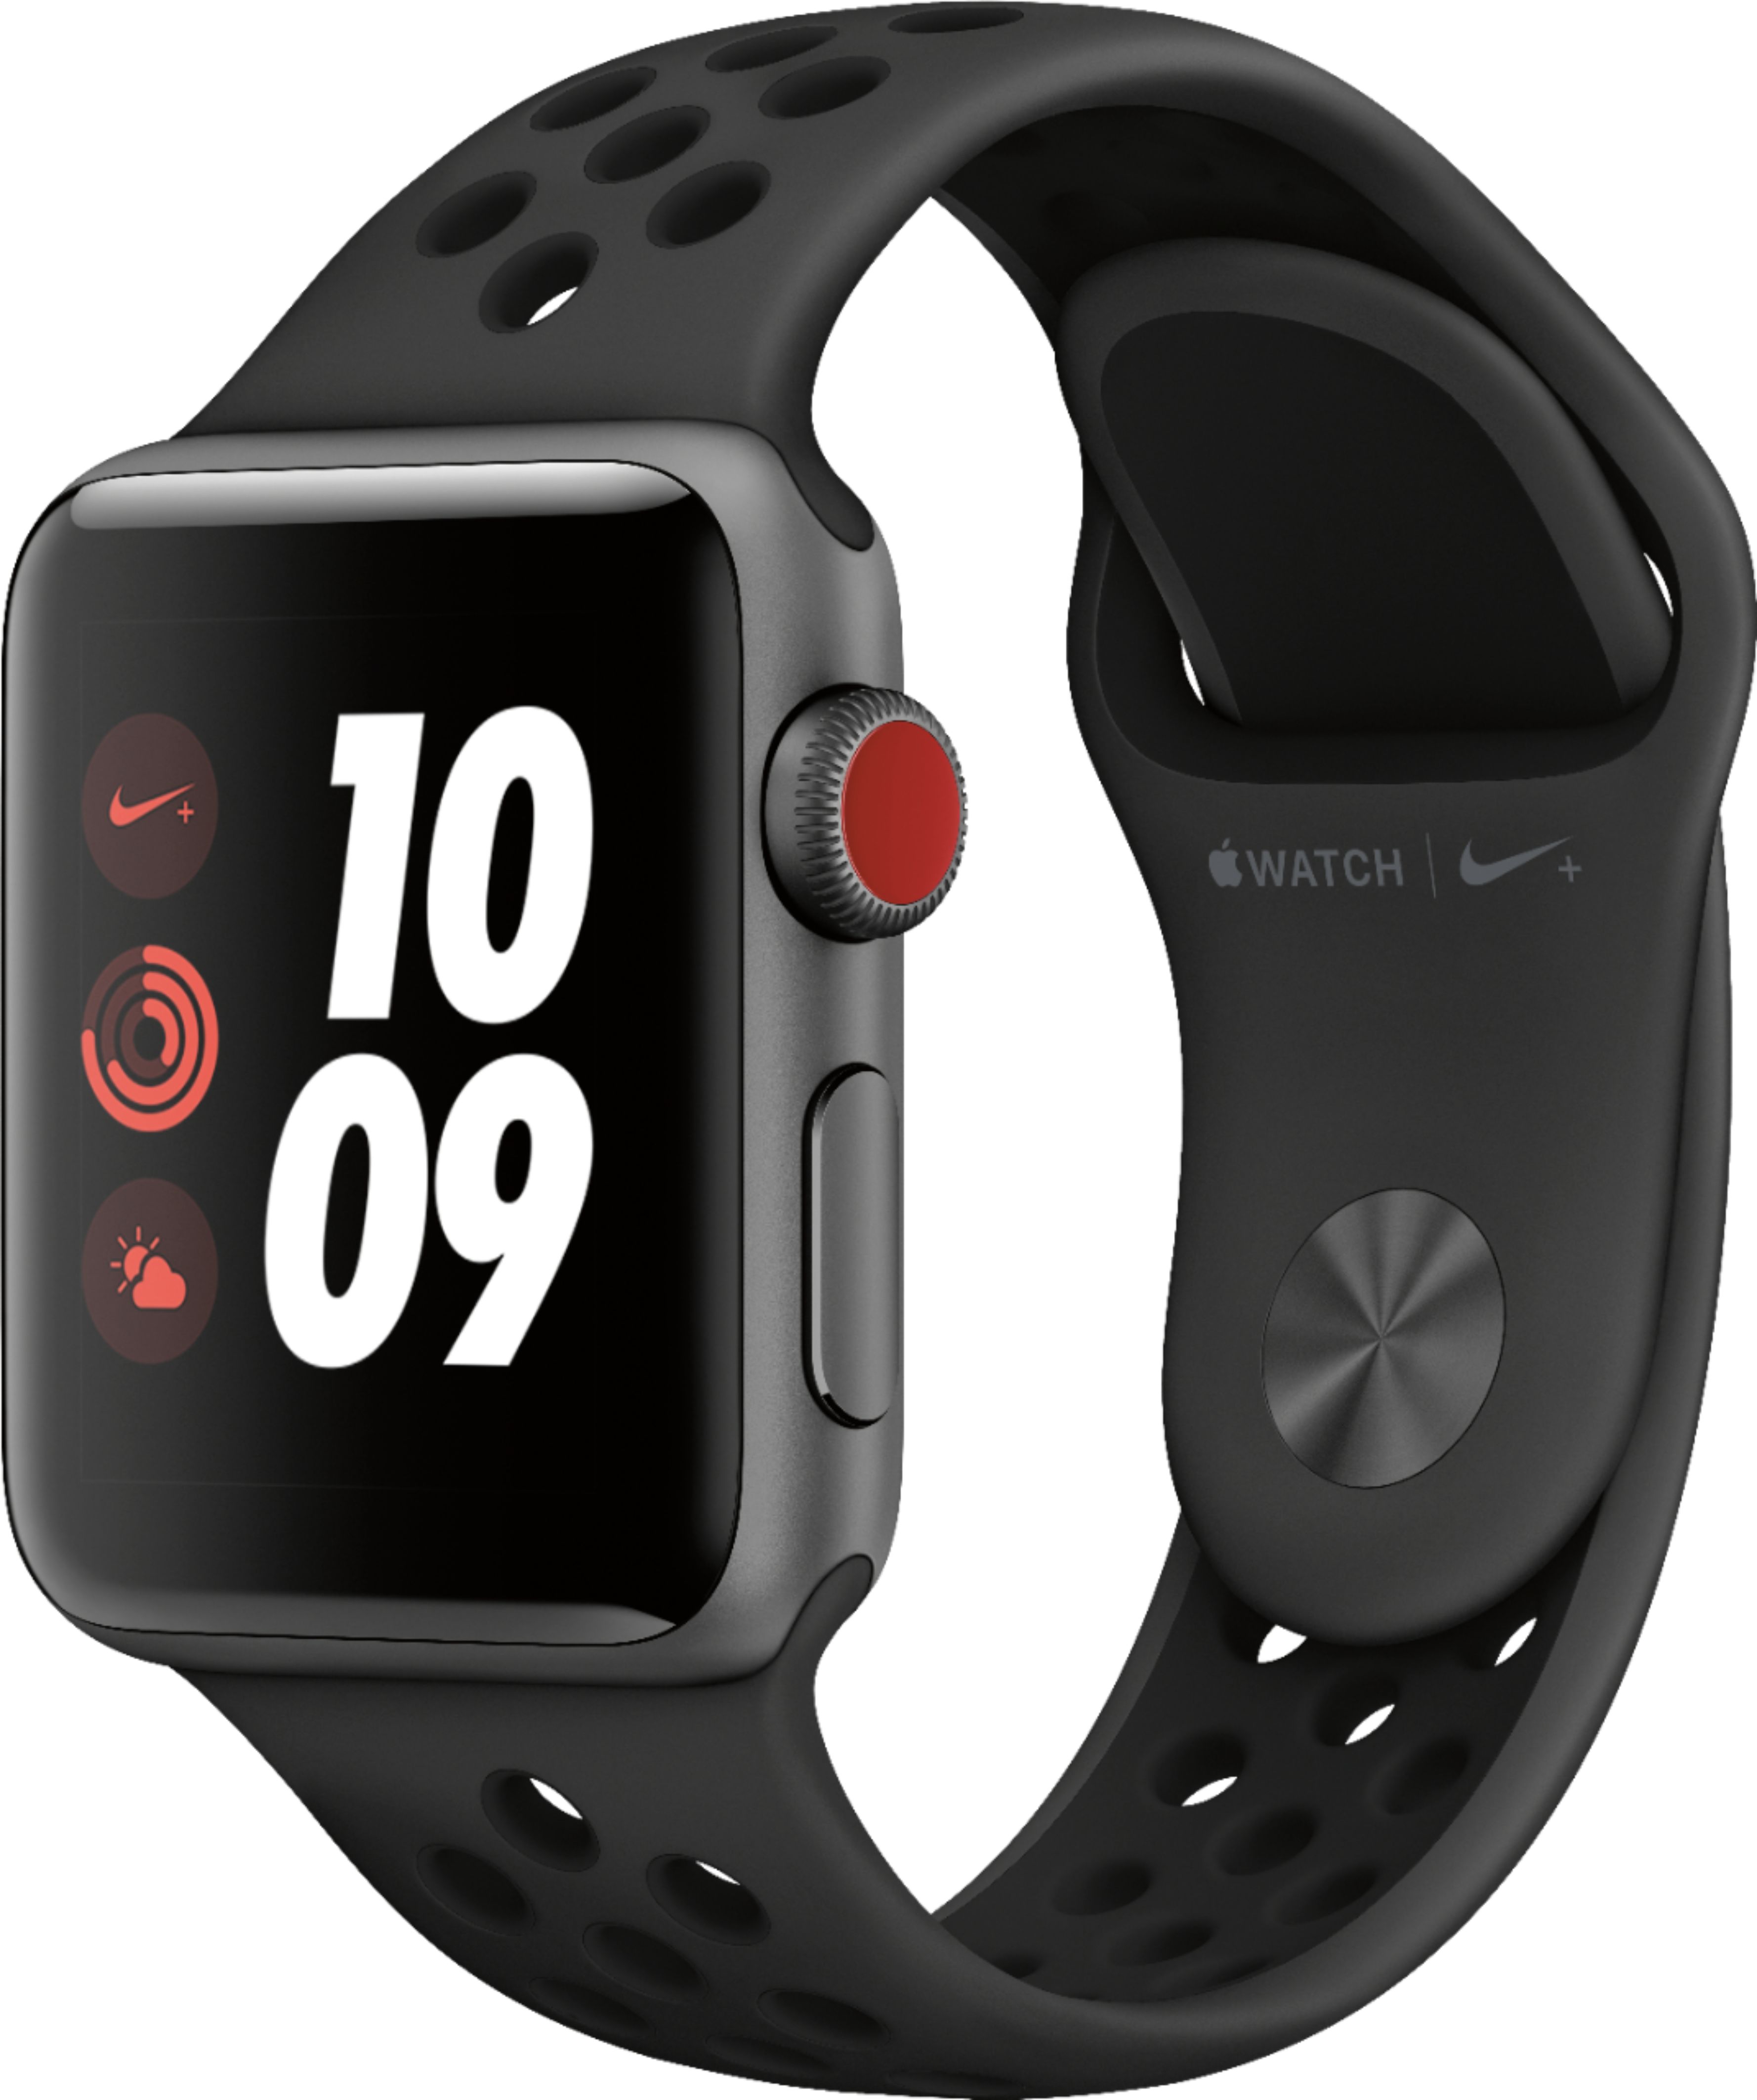 Apple Watch Nike+ Series 3 (GPS + Cellular) 38mm Aluminum Case 